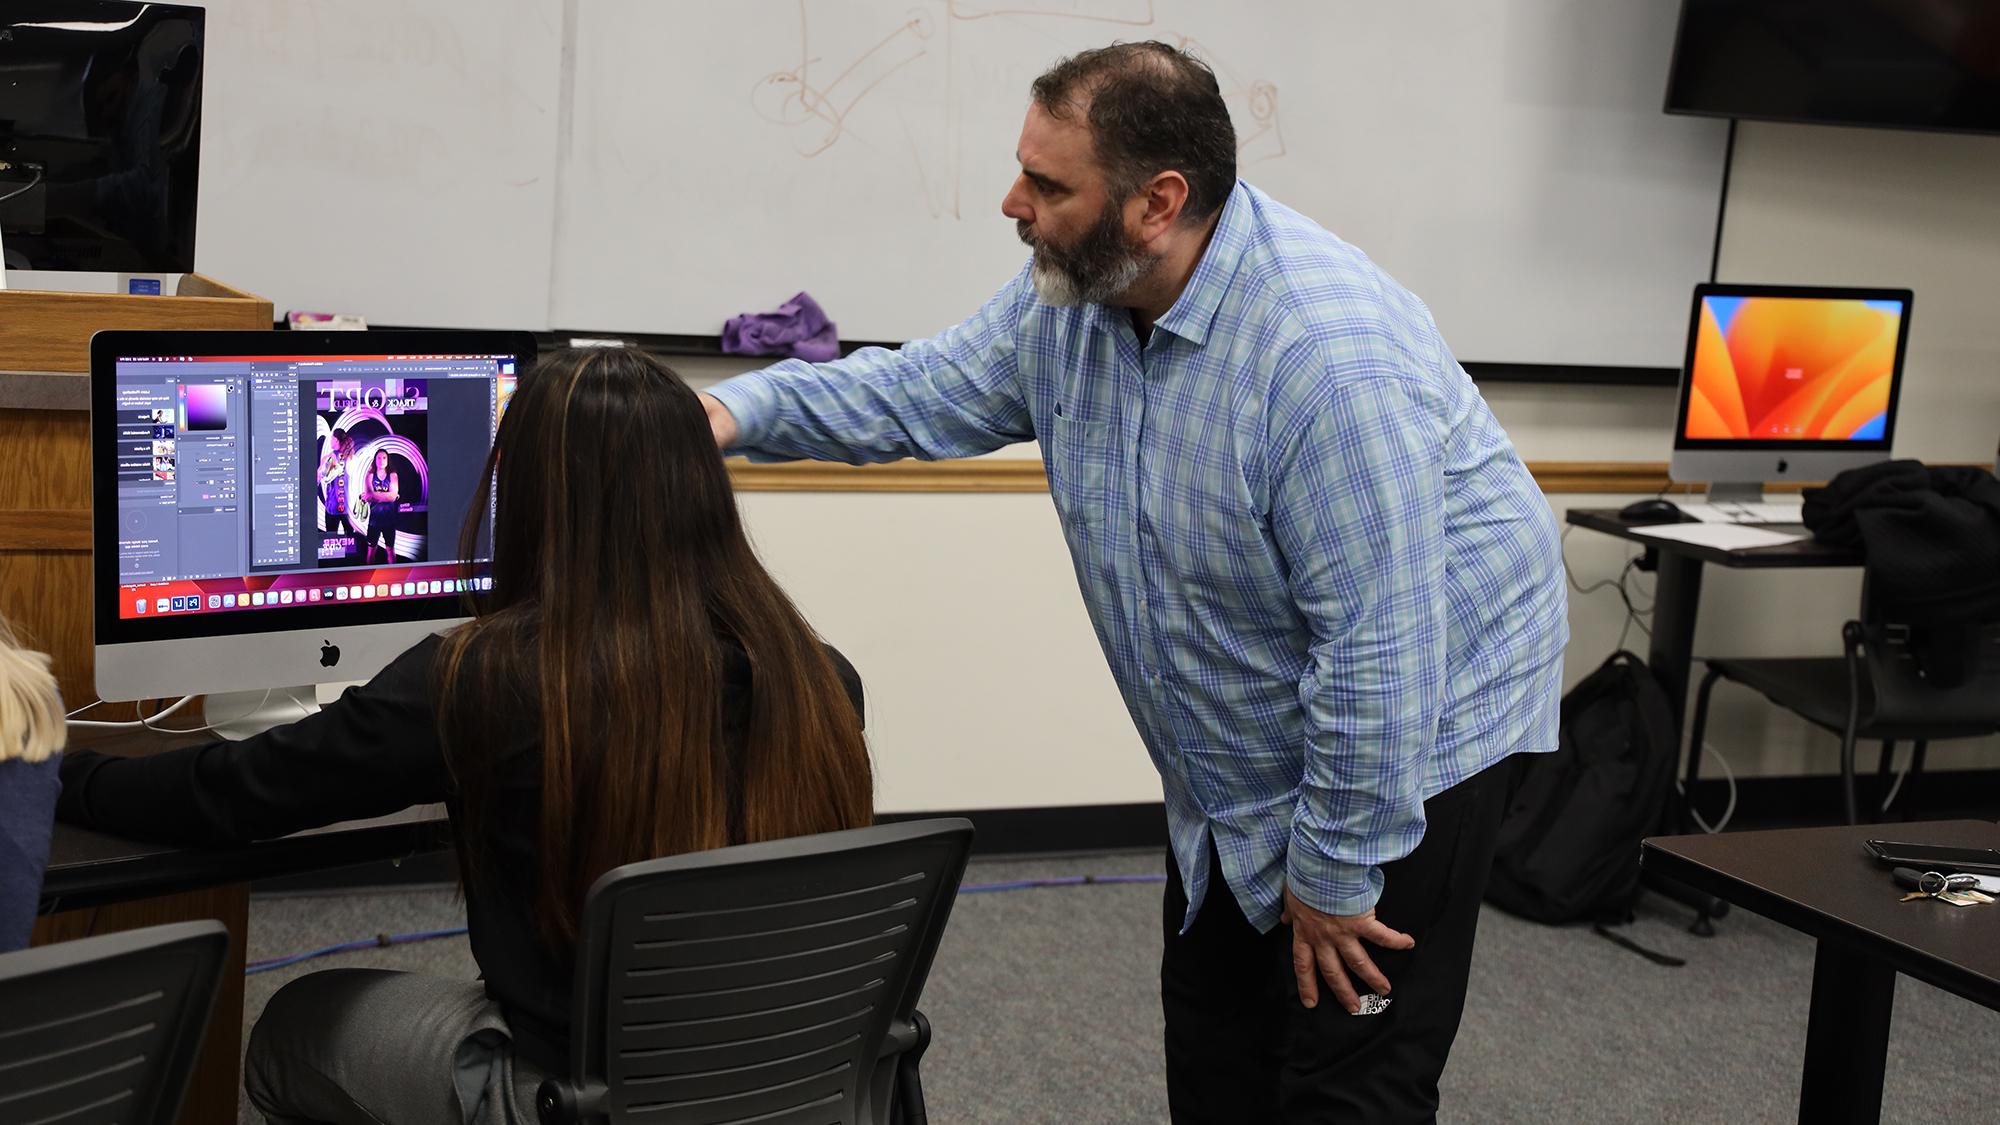 Teacher instructing student on computer